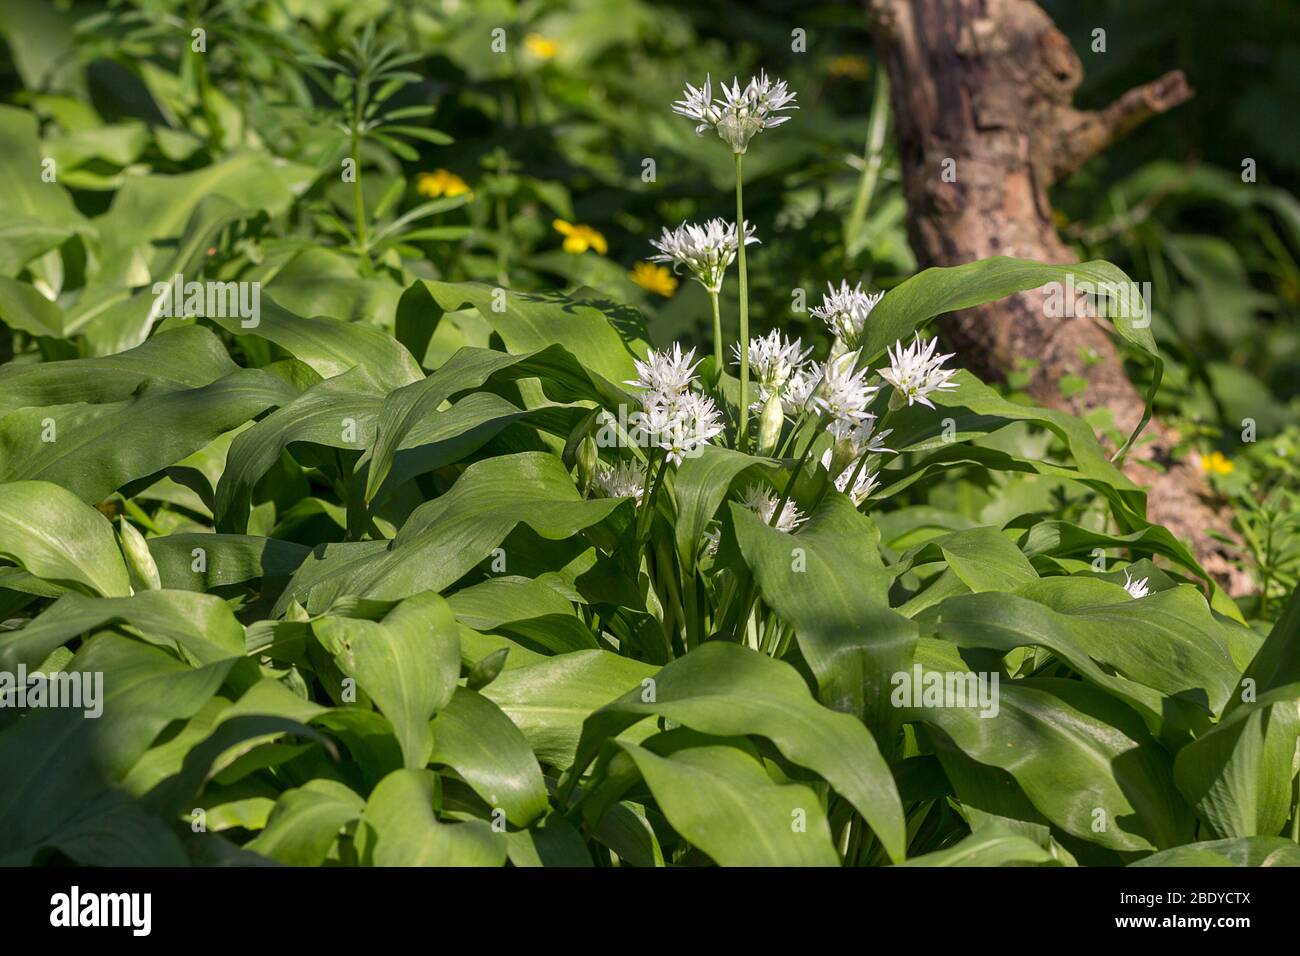 Wild garlic Allum ursinum a semi evergreen woodland plant of damp and shady eareas edible mild garlic taste with white flowers six long pointed petals Stock Photo